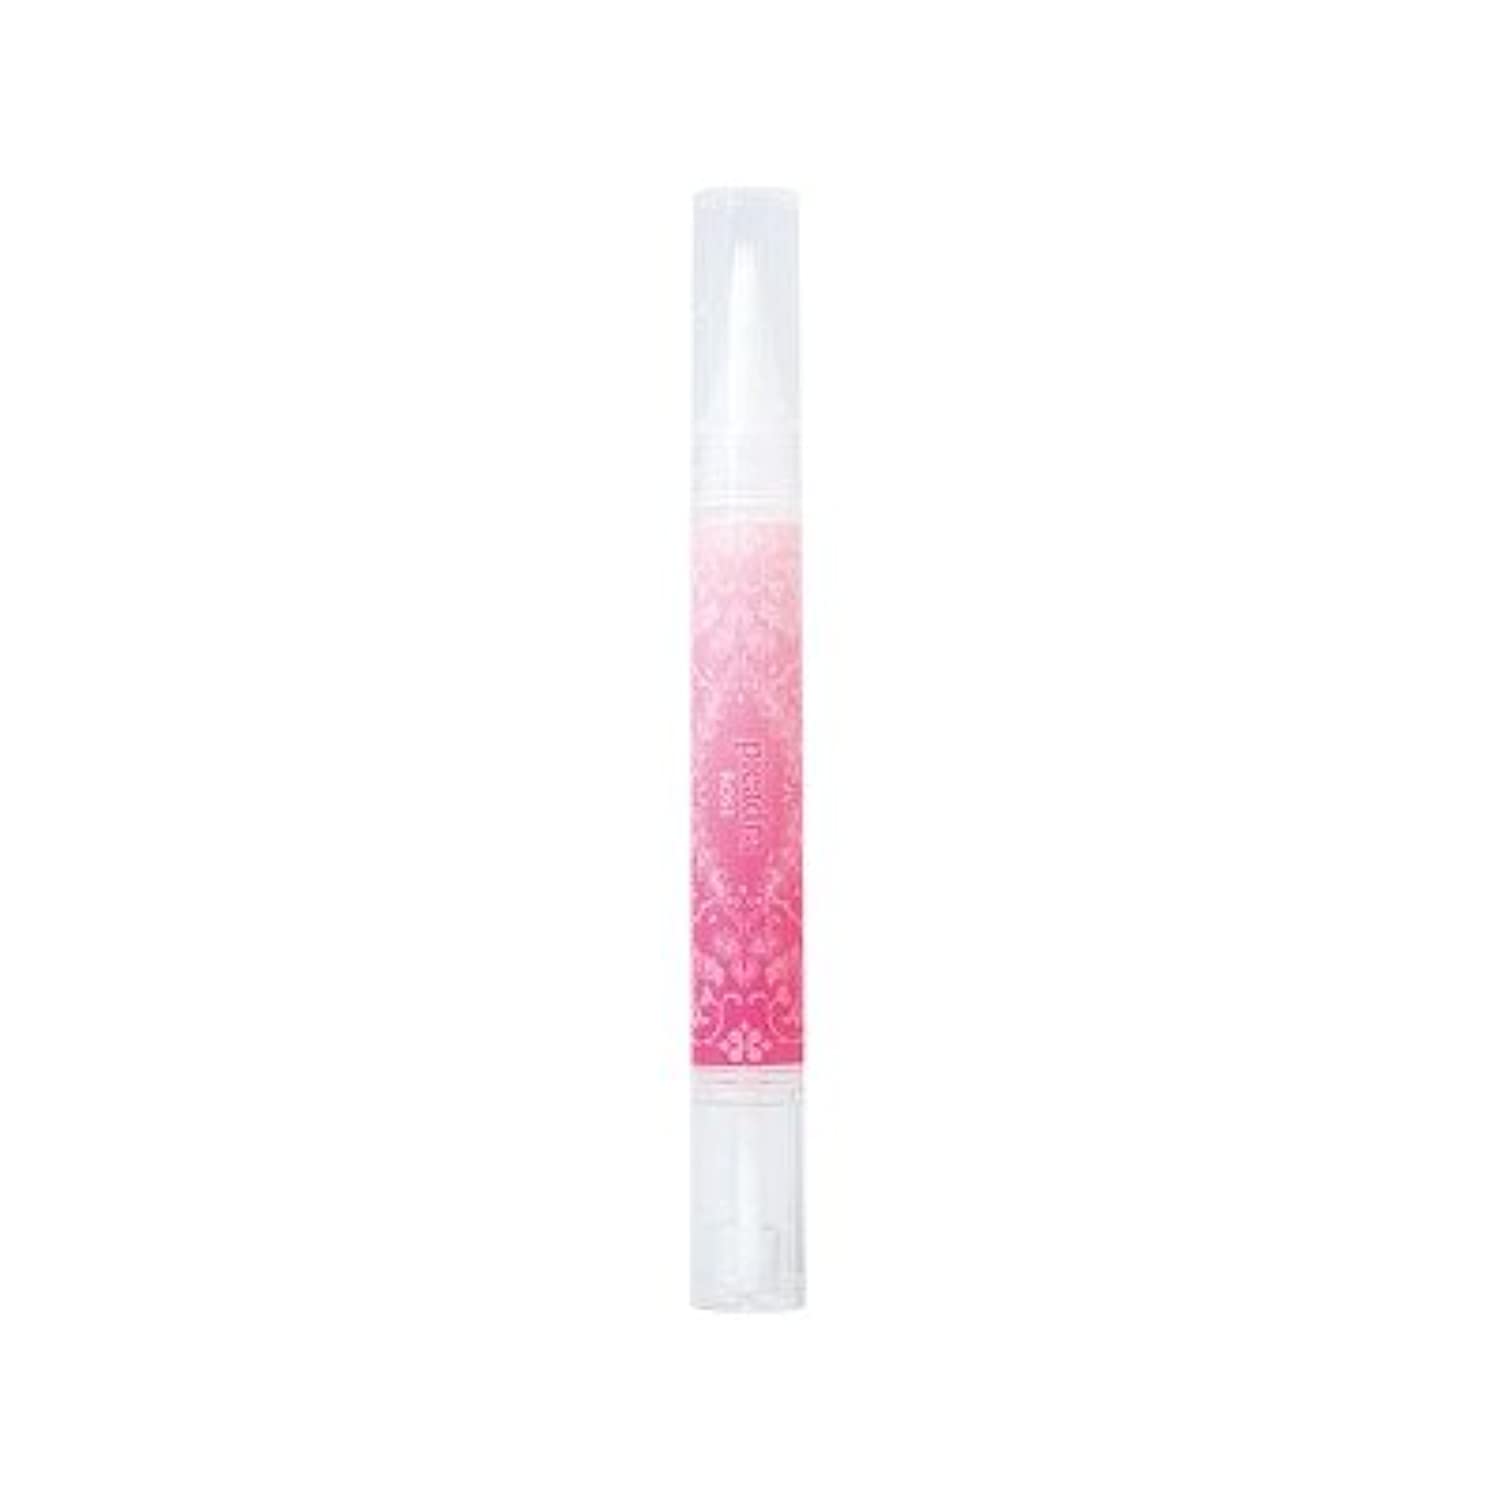 Piadora cuticle oil pen Rose 3.7ml